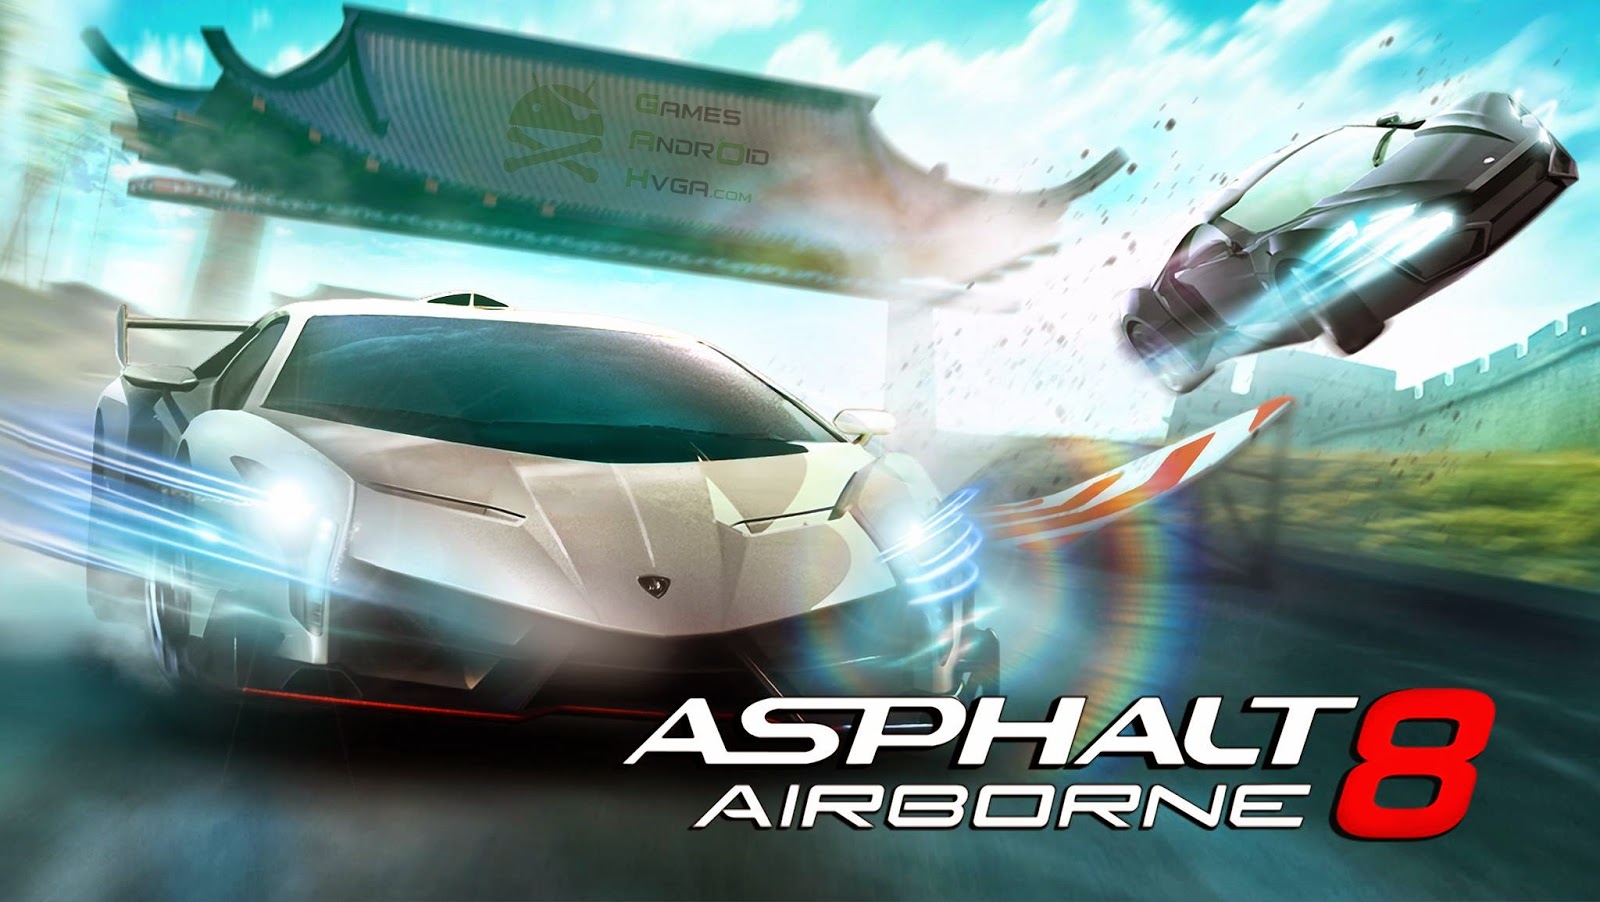 Asphalt 8: Airborne HD wallpapers, Desktop wallpaper - most viewed